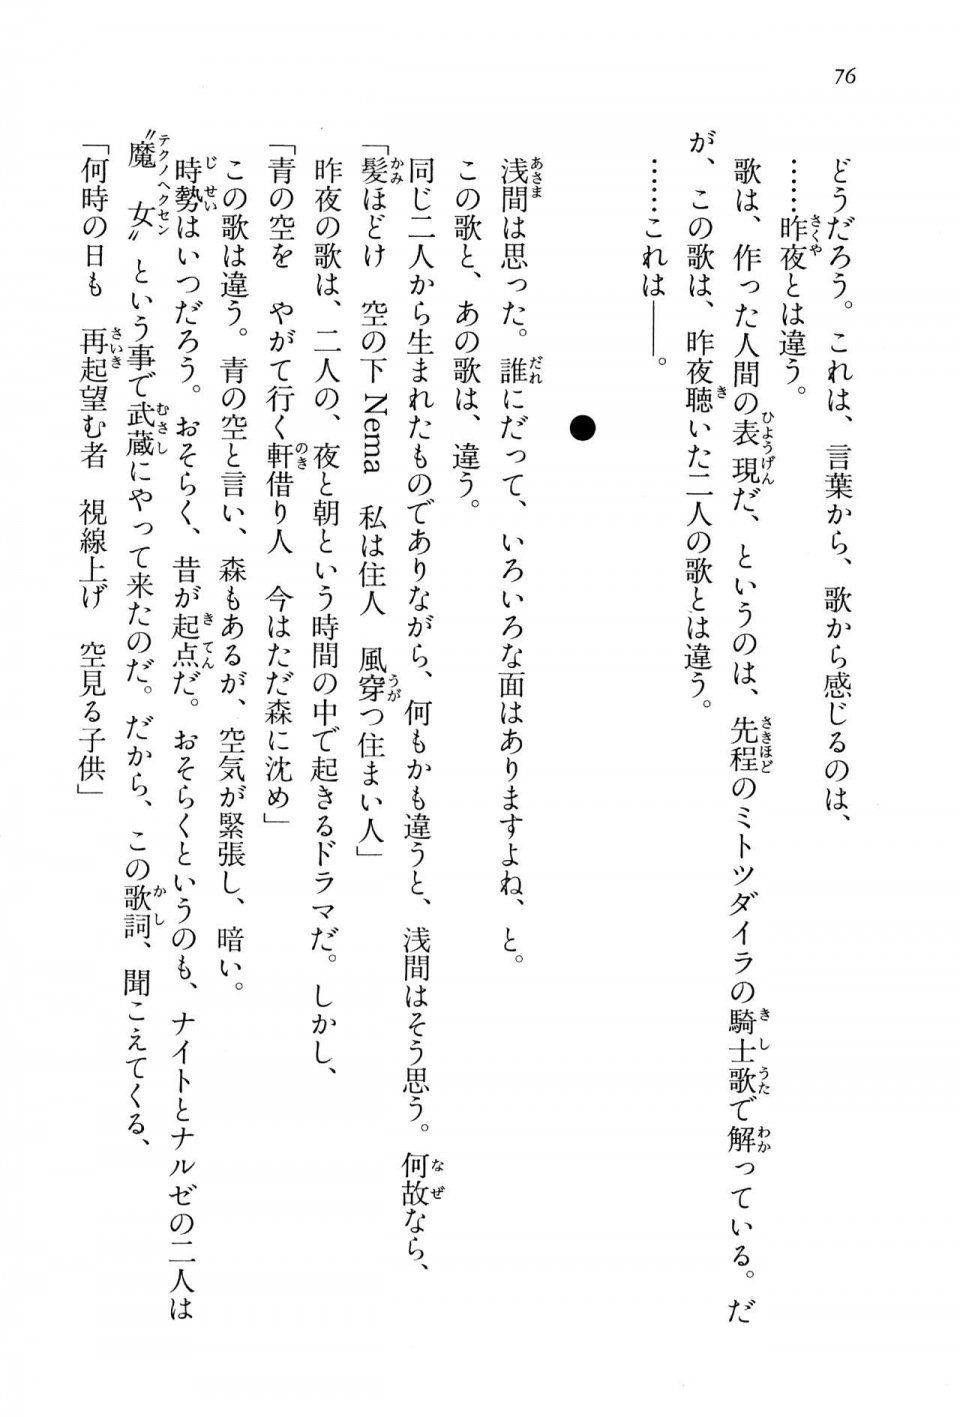 Kyoukai Senjou no Horizon BD Special Mininovel Vol 3(2A) - Photo #80